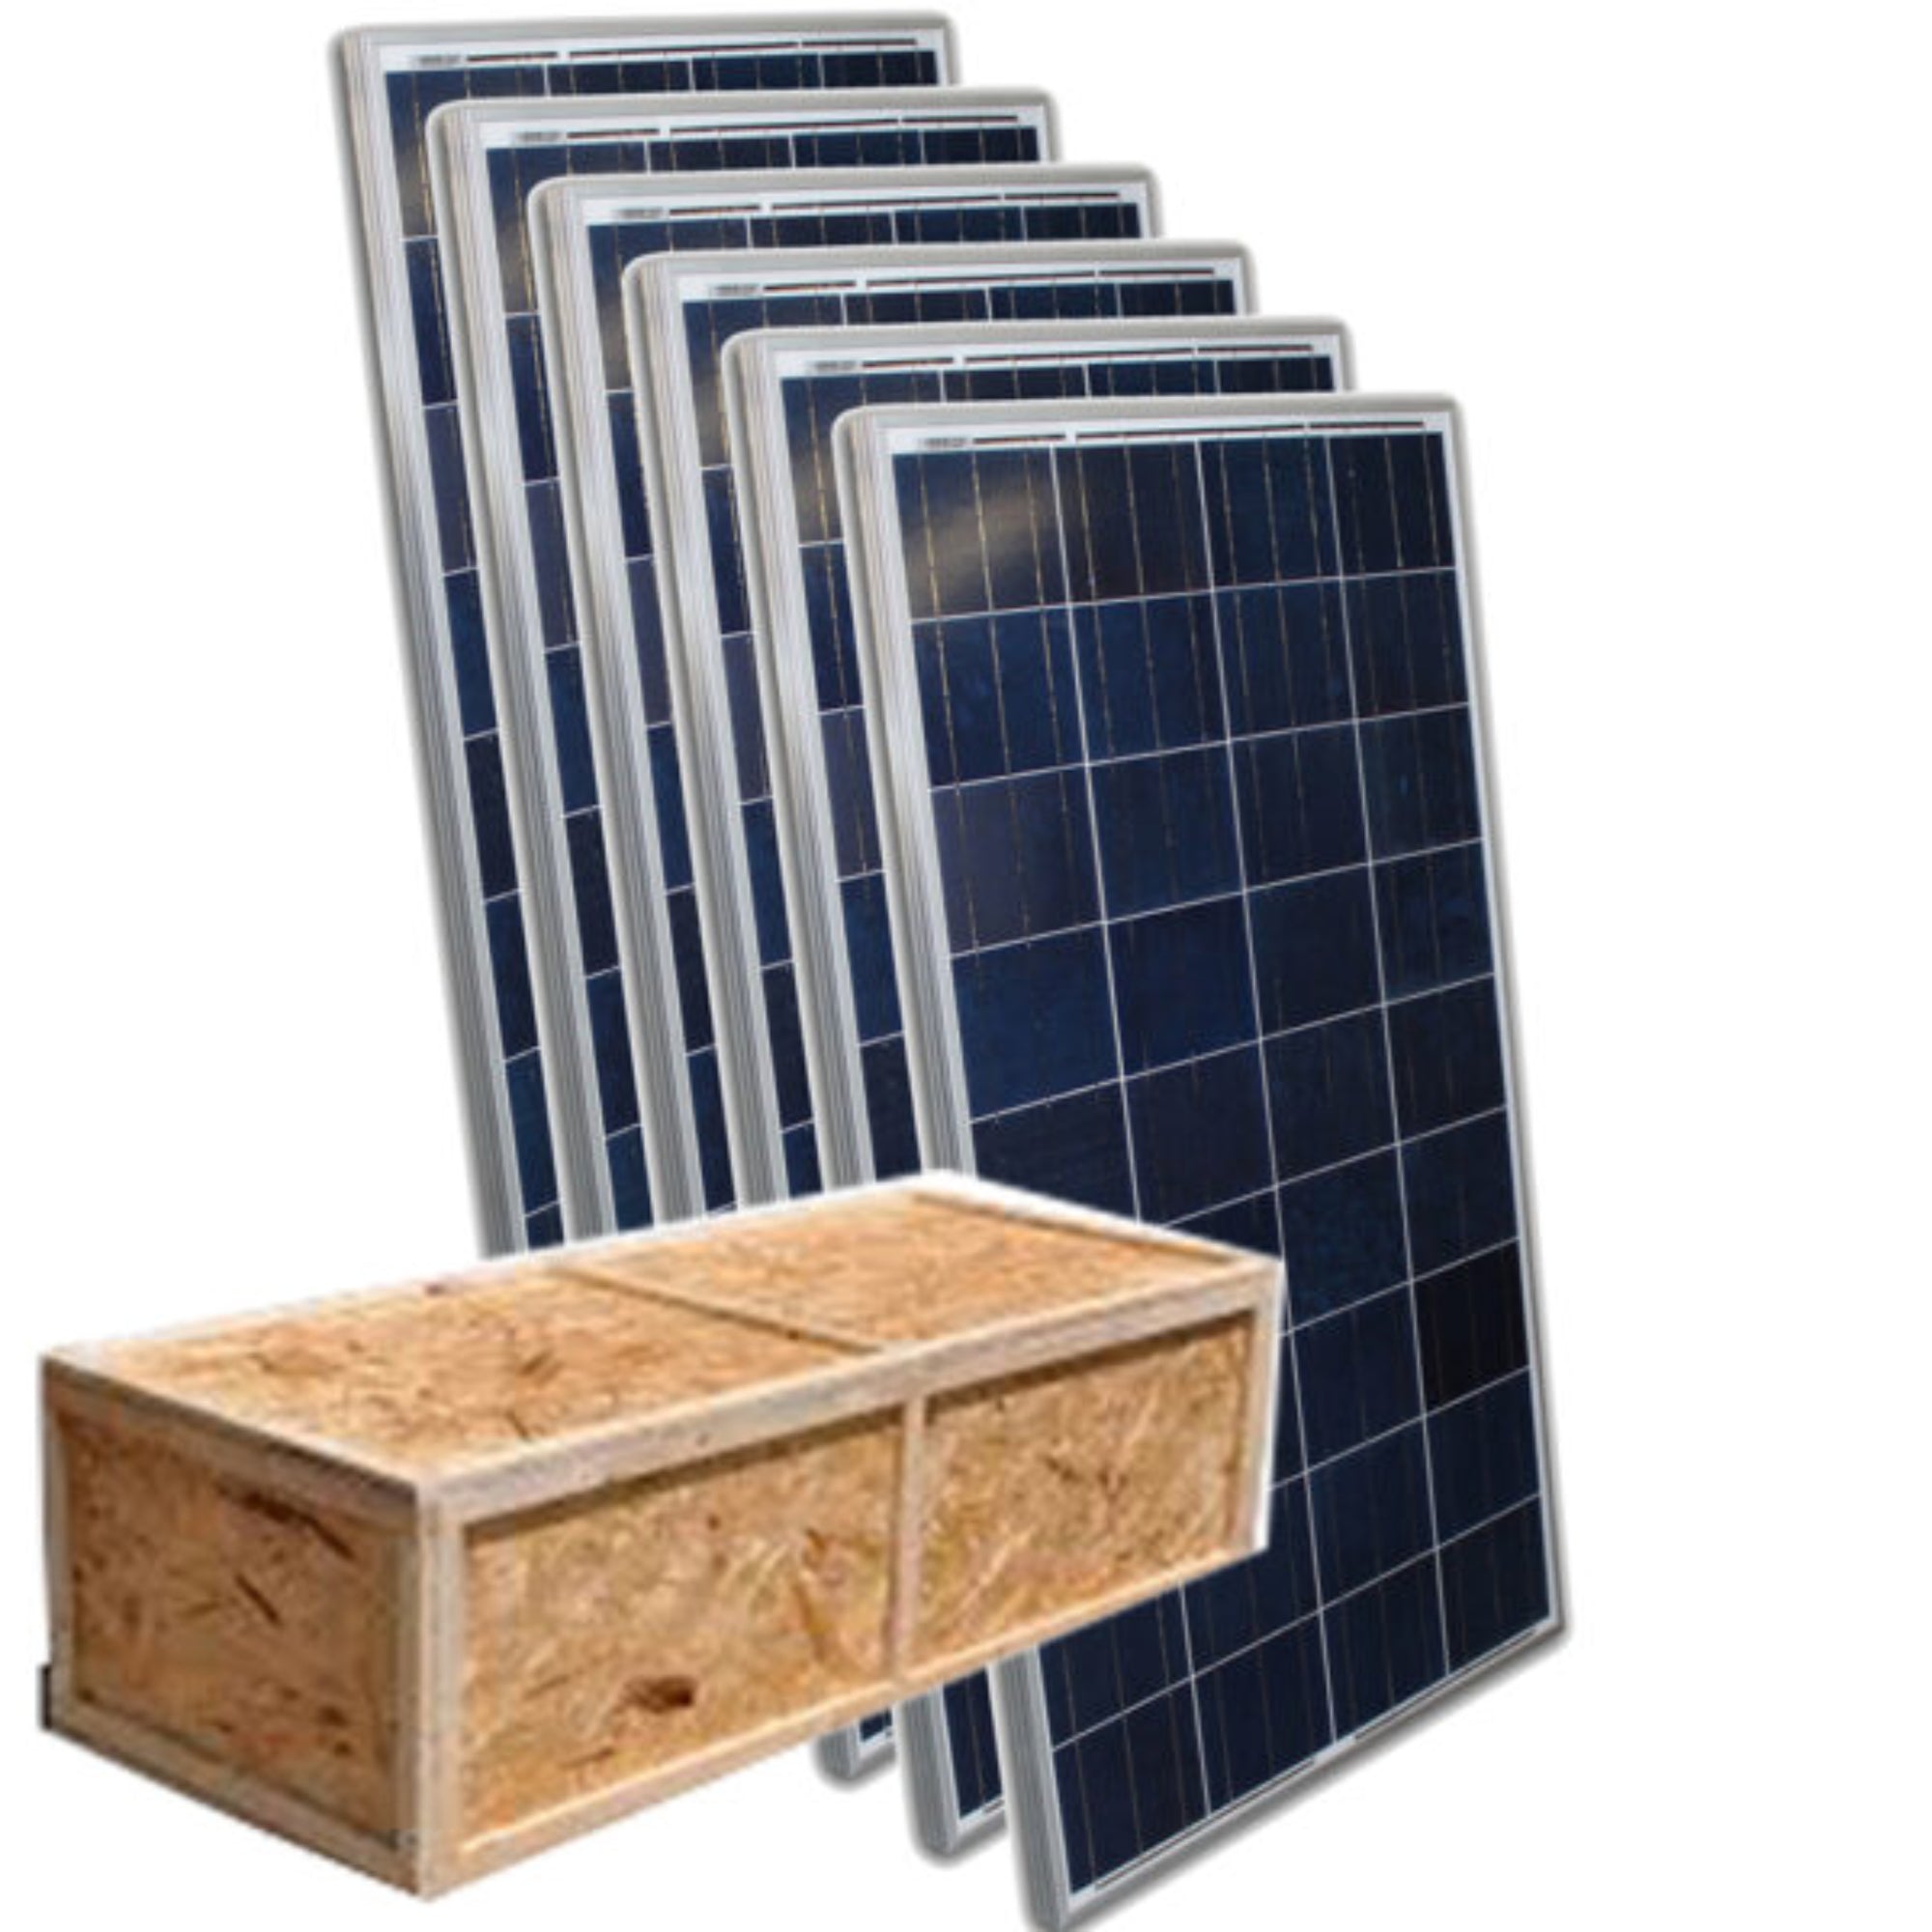 AIMS Power | 330 Watt Monocrystalline Solar Panel | Pack of 6 Panels